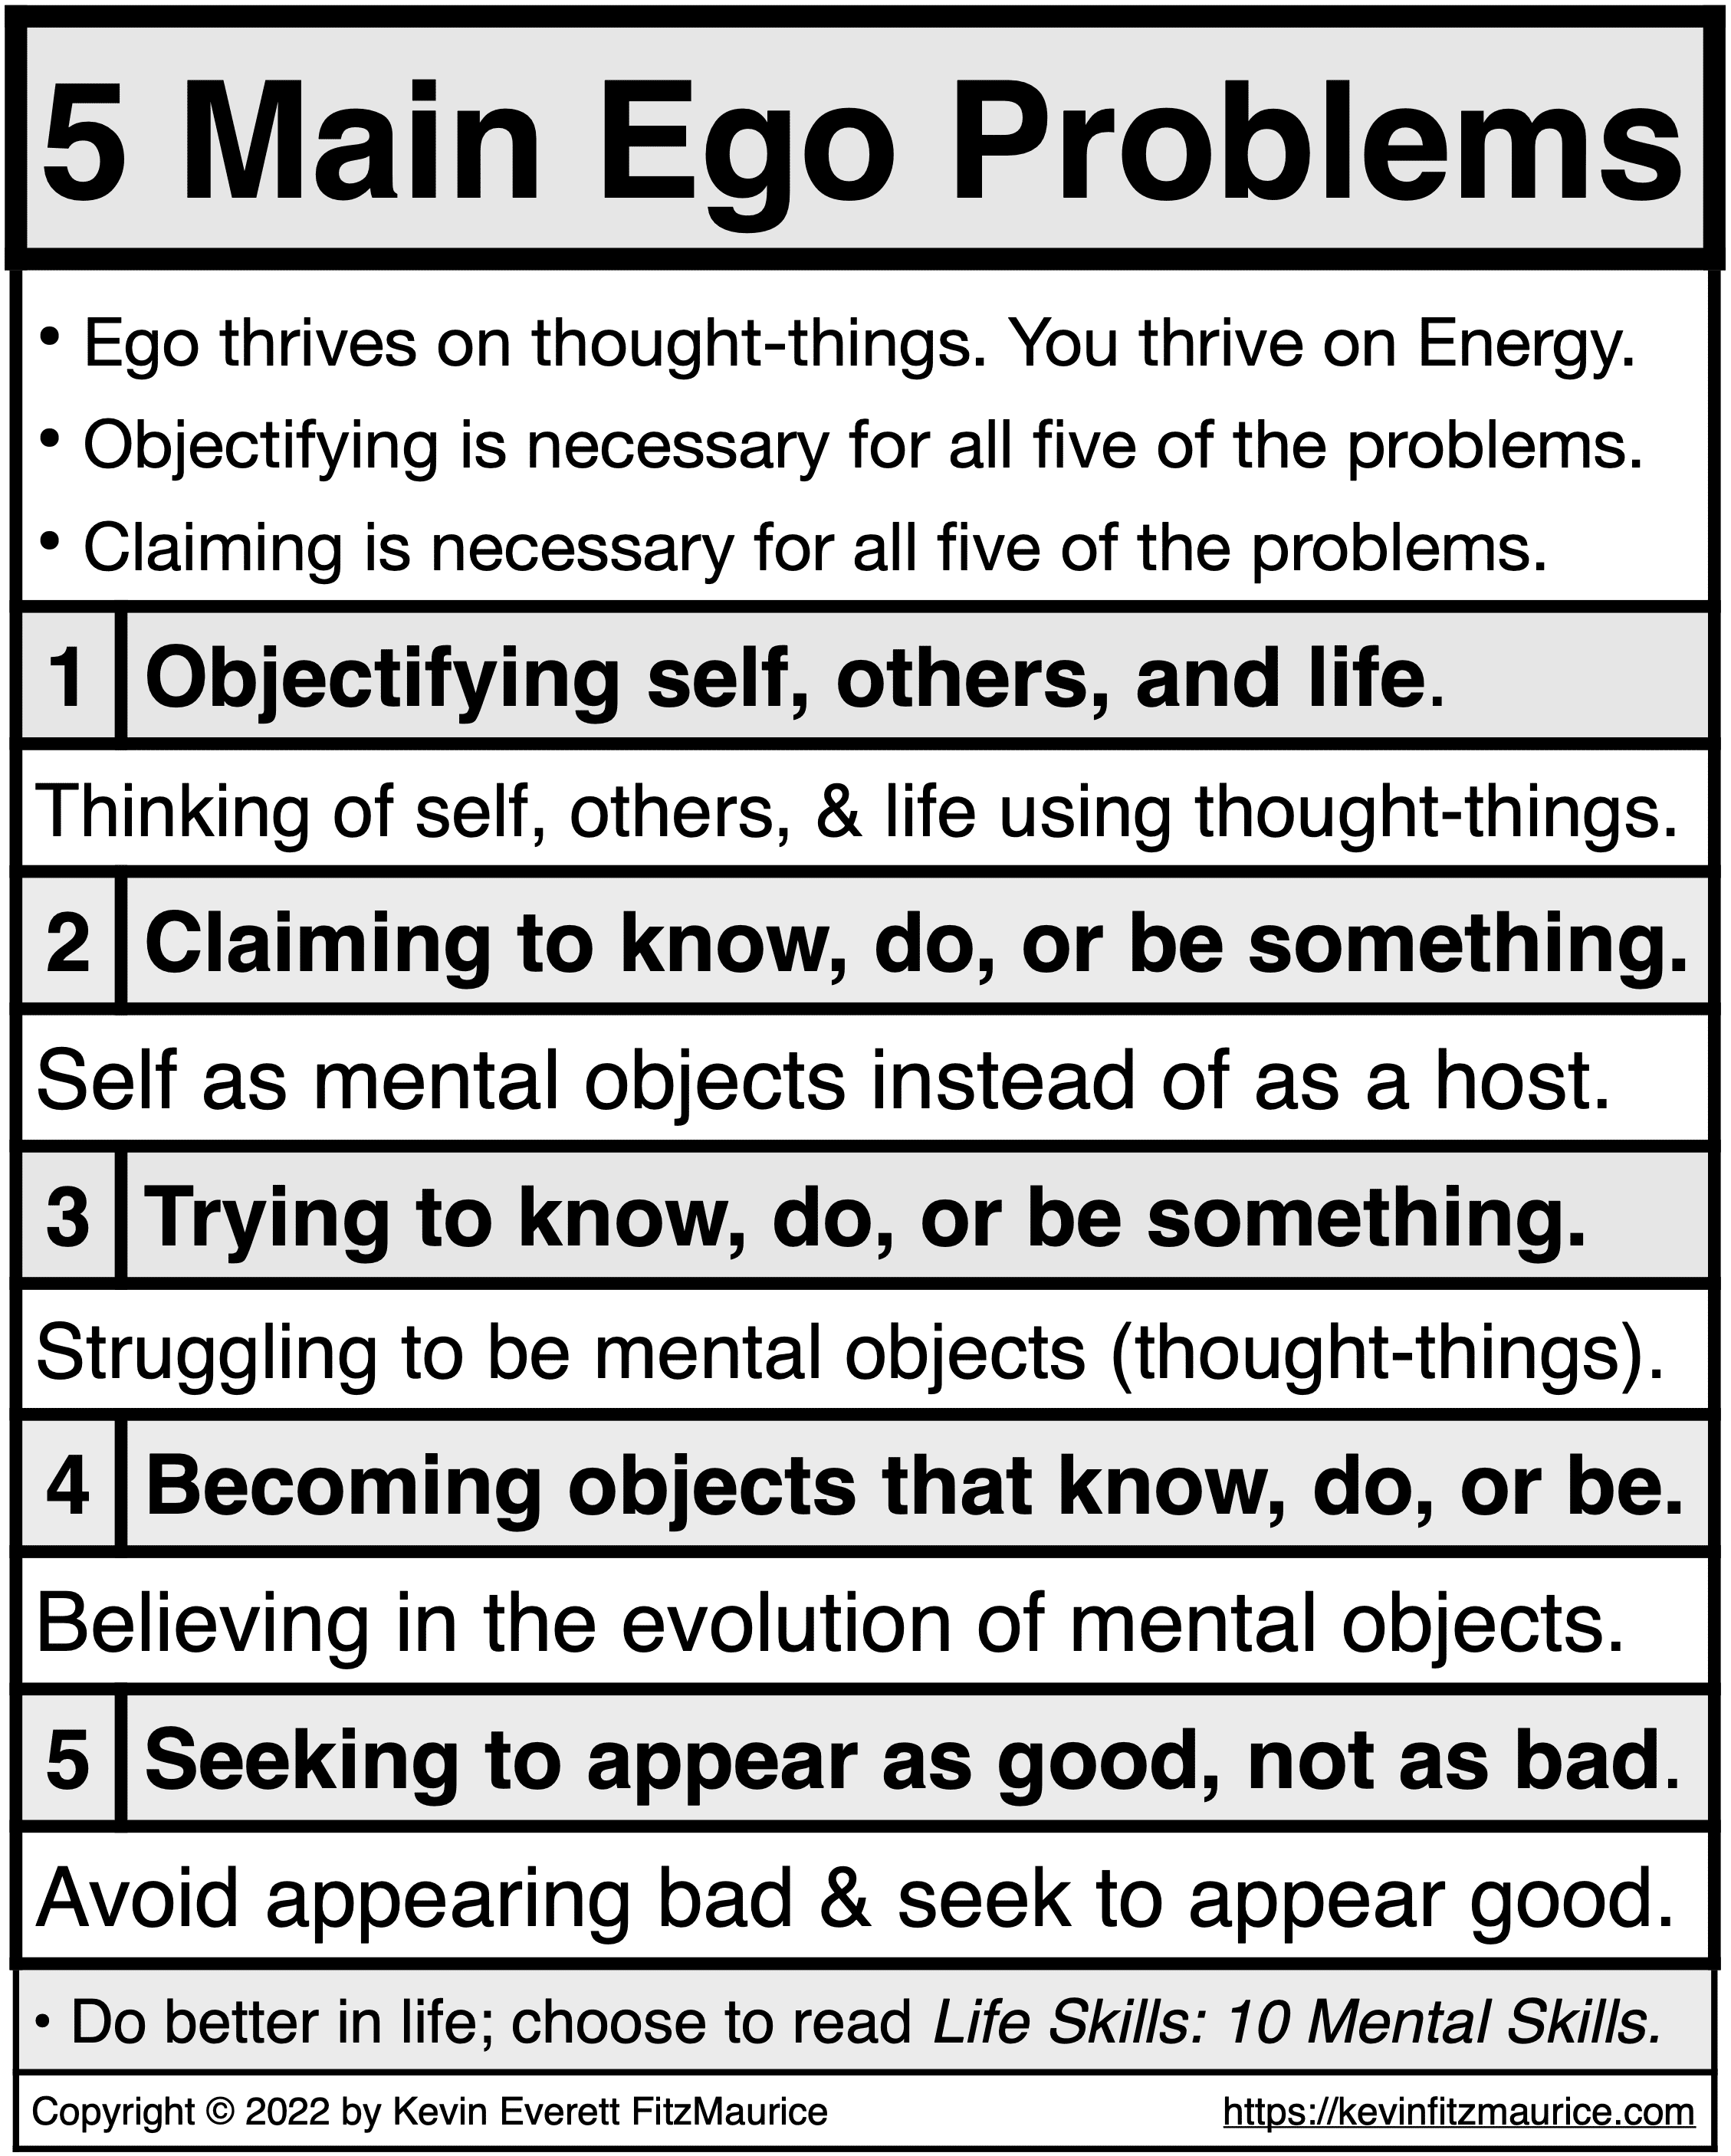 5 Main Ego Problems